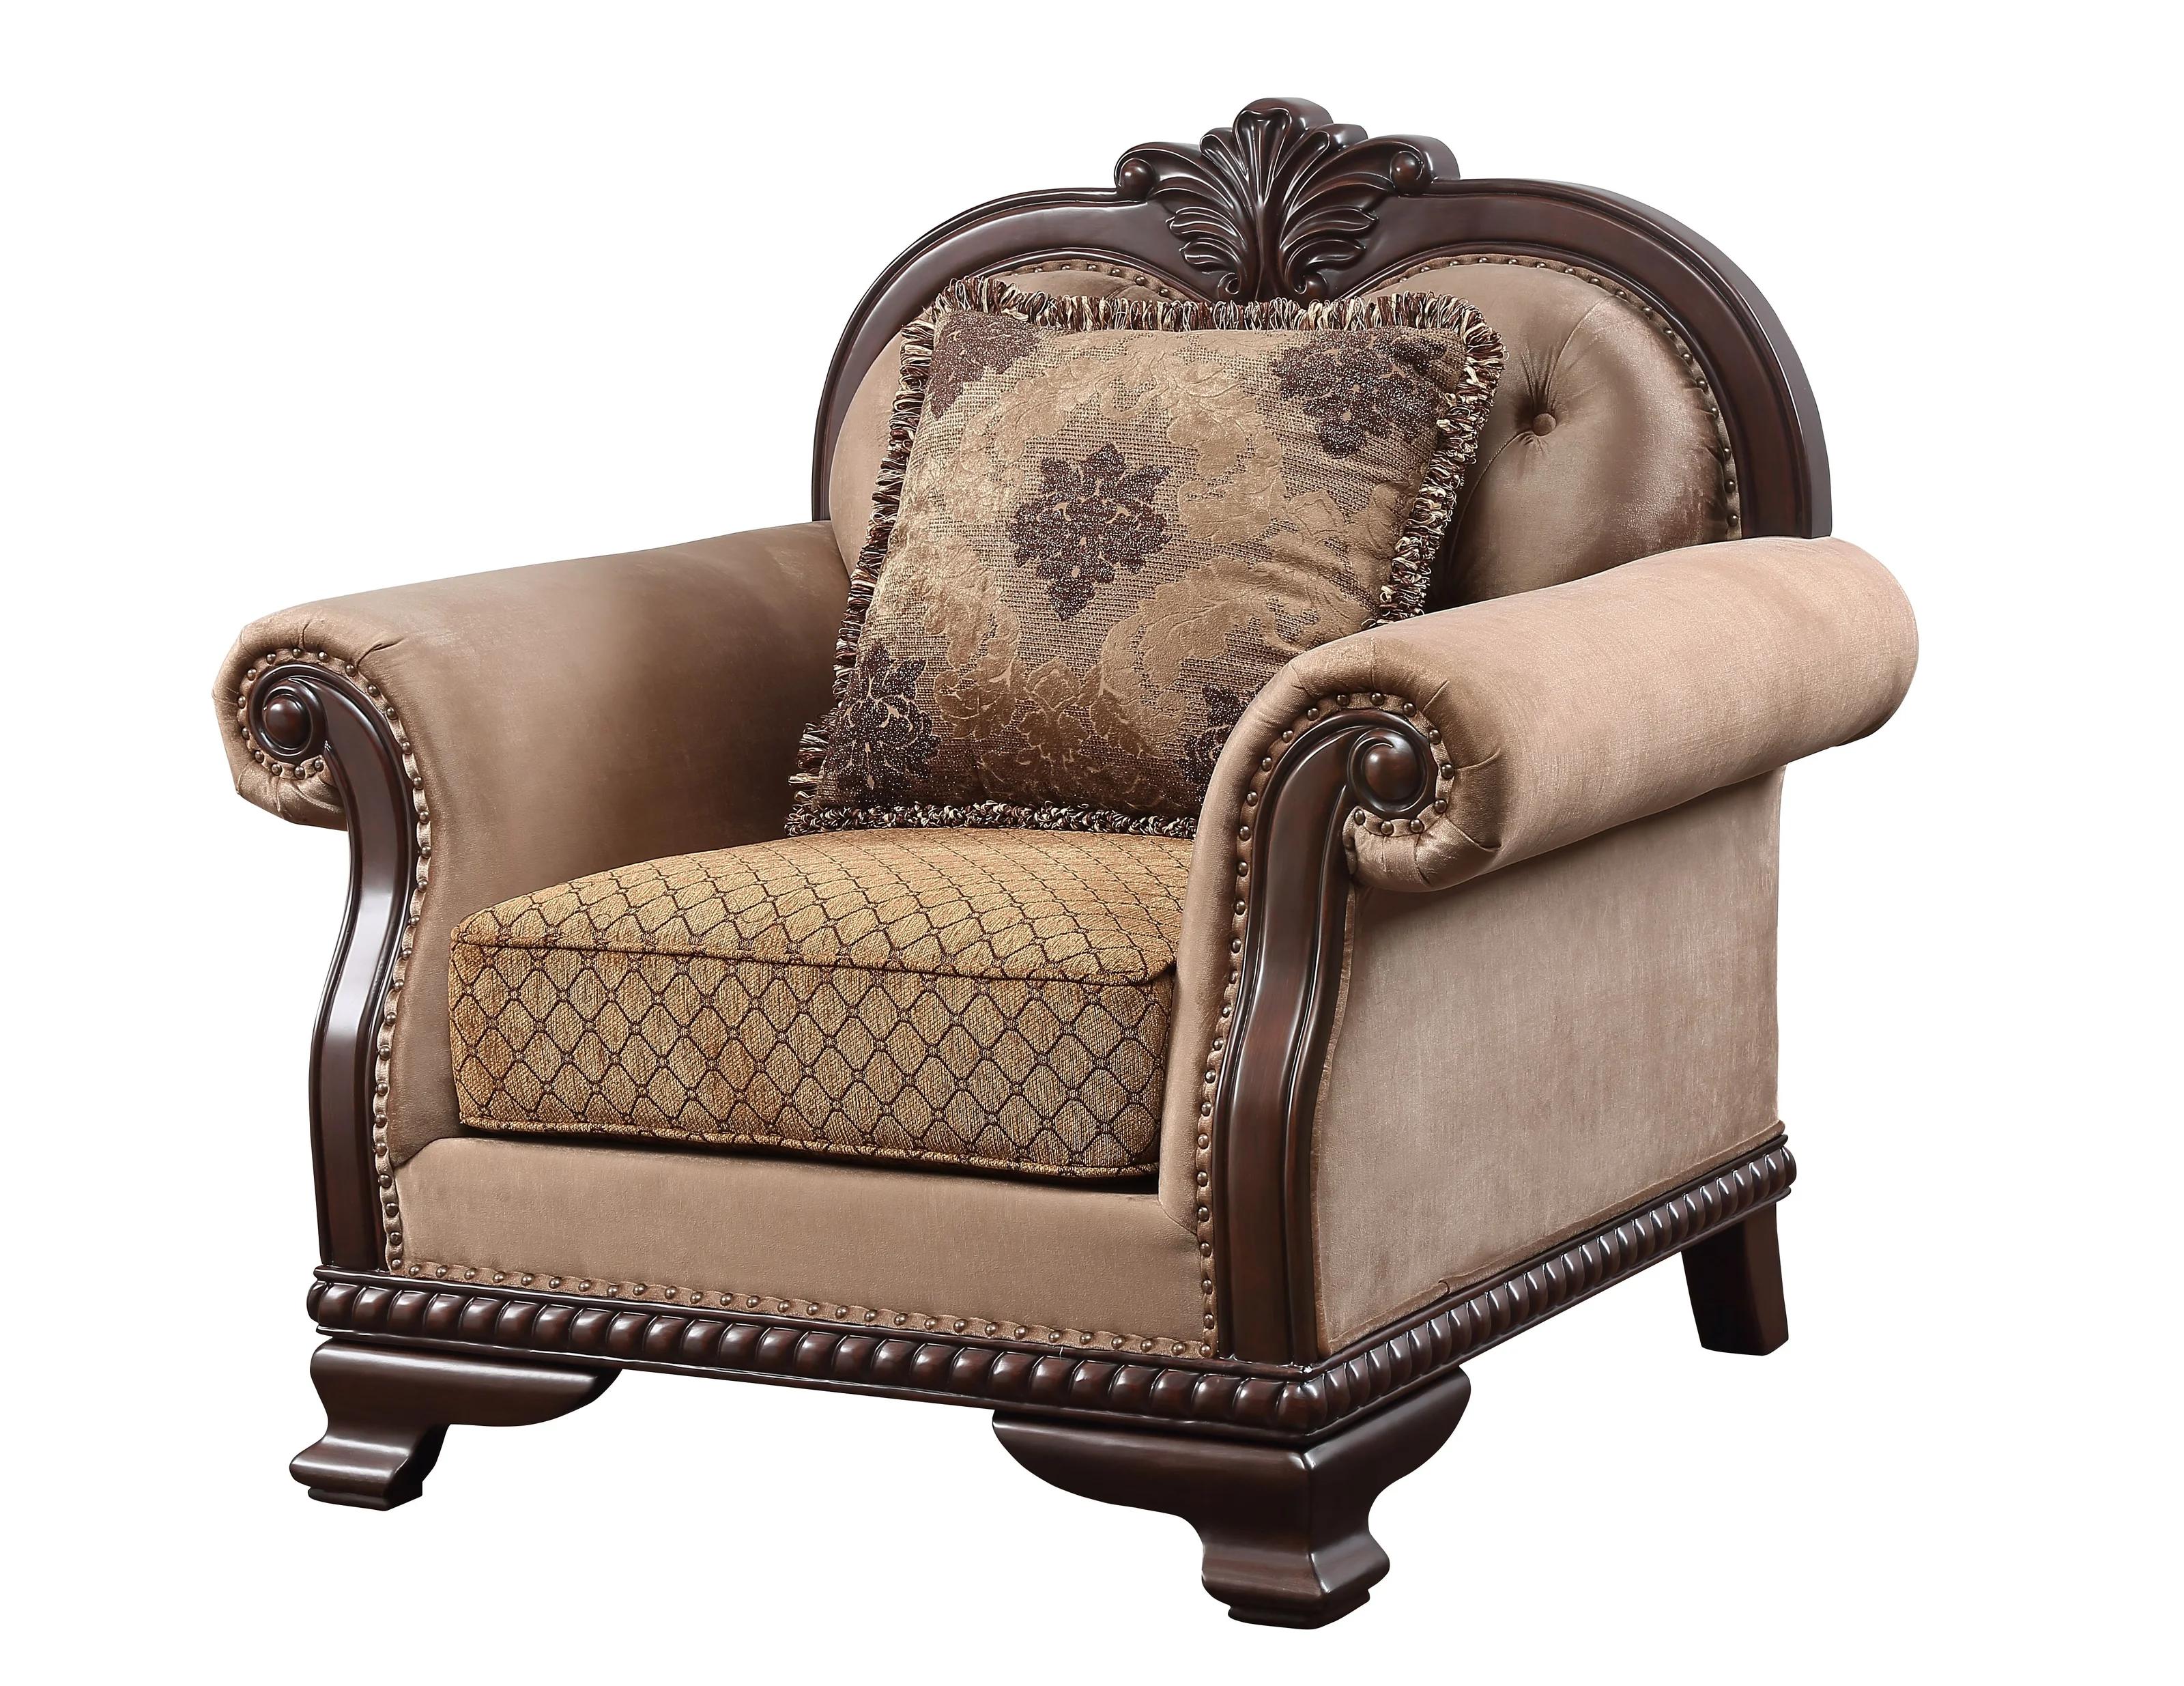 Classic Chair Chateau De Ville 58267 in Tan Fabric